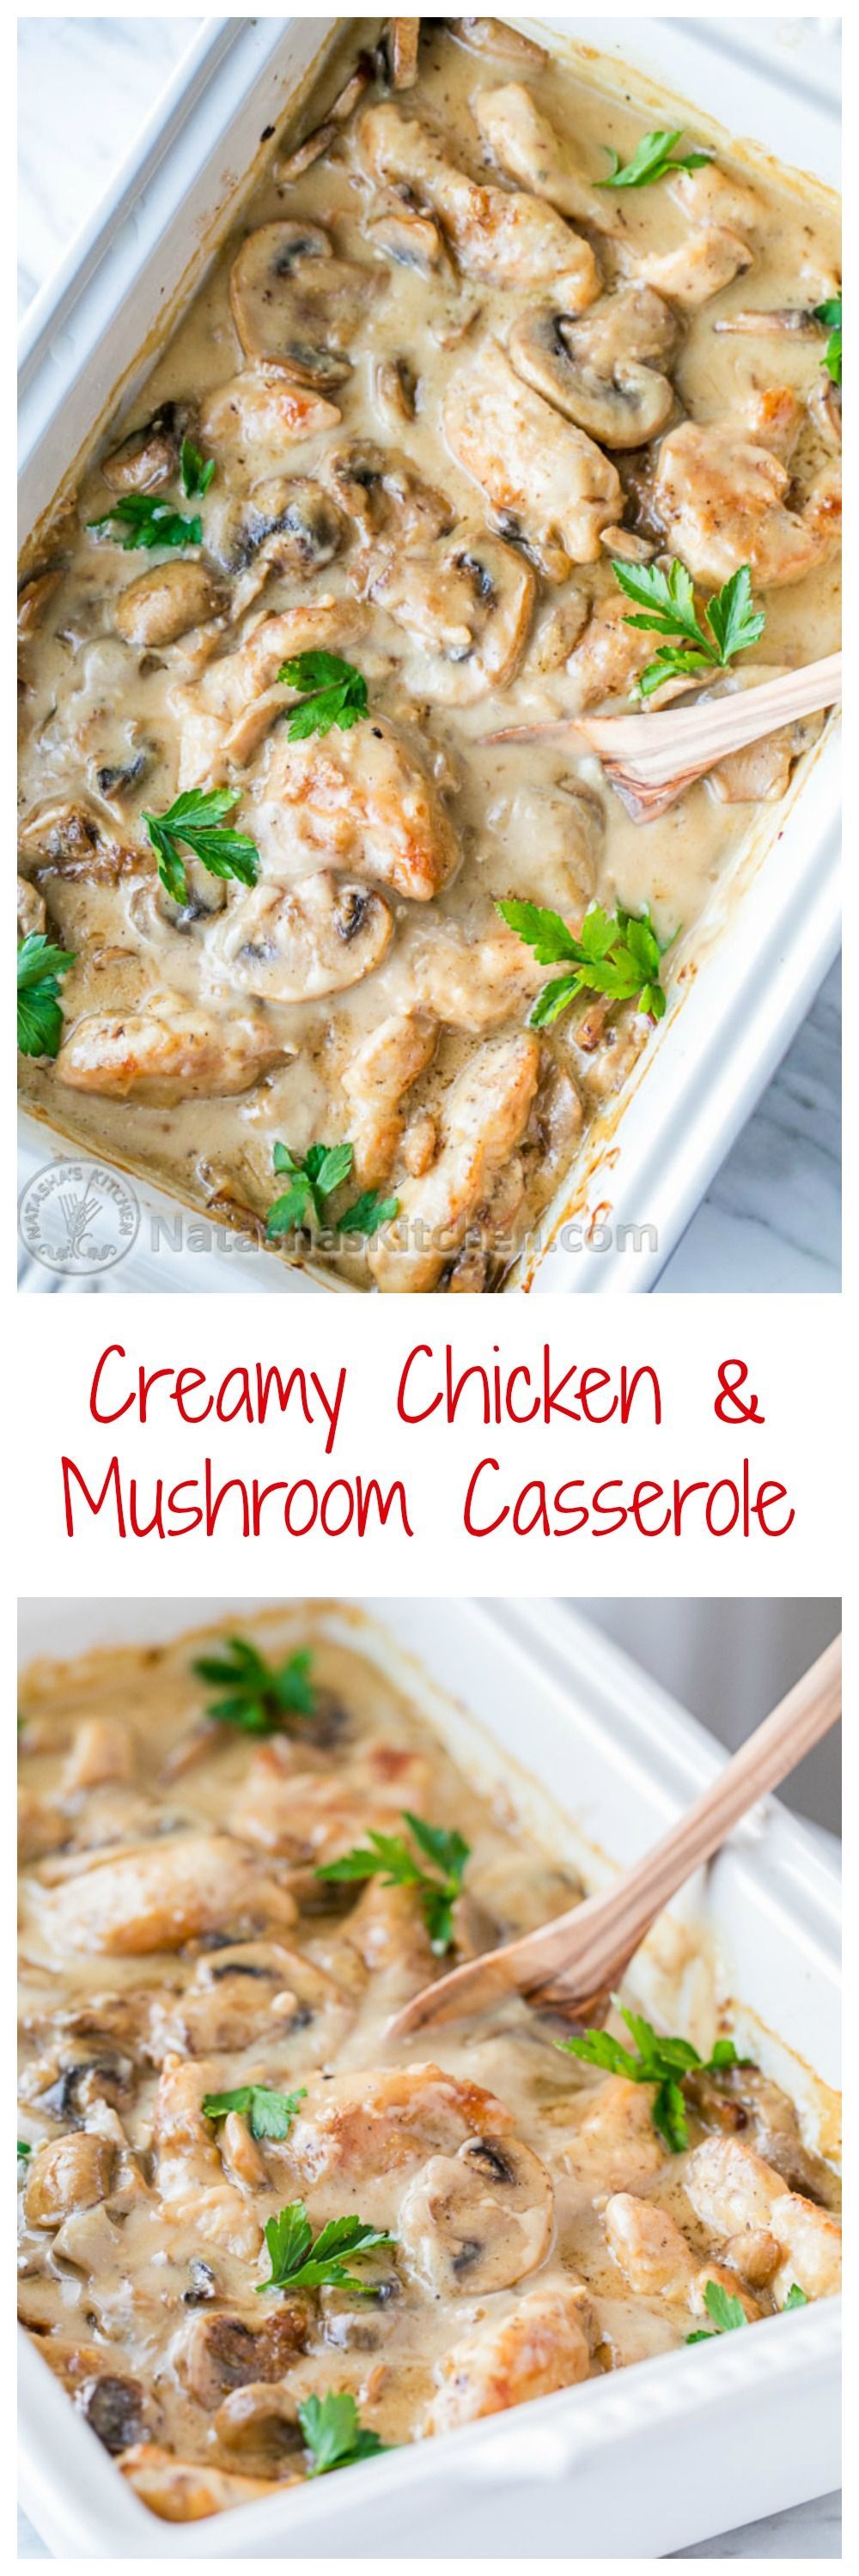 Creamy Chicken and Mushroom Casserole (aka Chicken Gloria) perfect for parties! @natashaskitchen